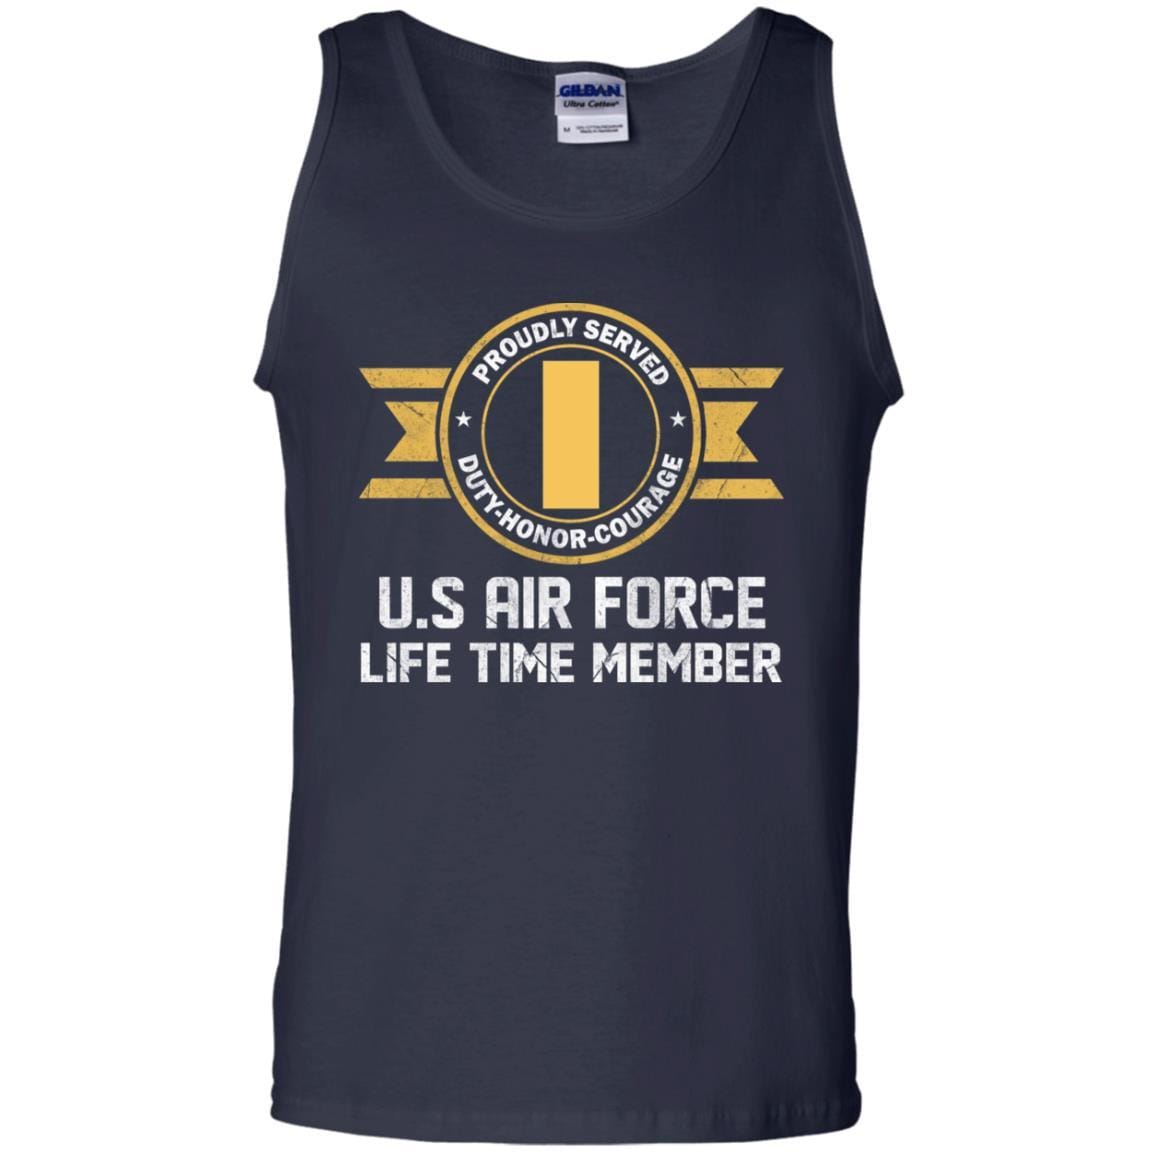 Life time member-US Air Force O-1 Second Lieutenant 2d Lt O1 Commissioned Officer Ranks Men T Shirt On Front-TShirt-USAF-Veterans Nation